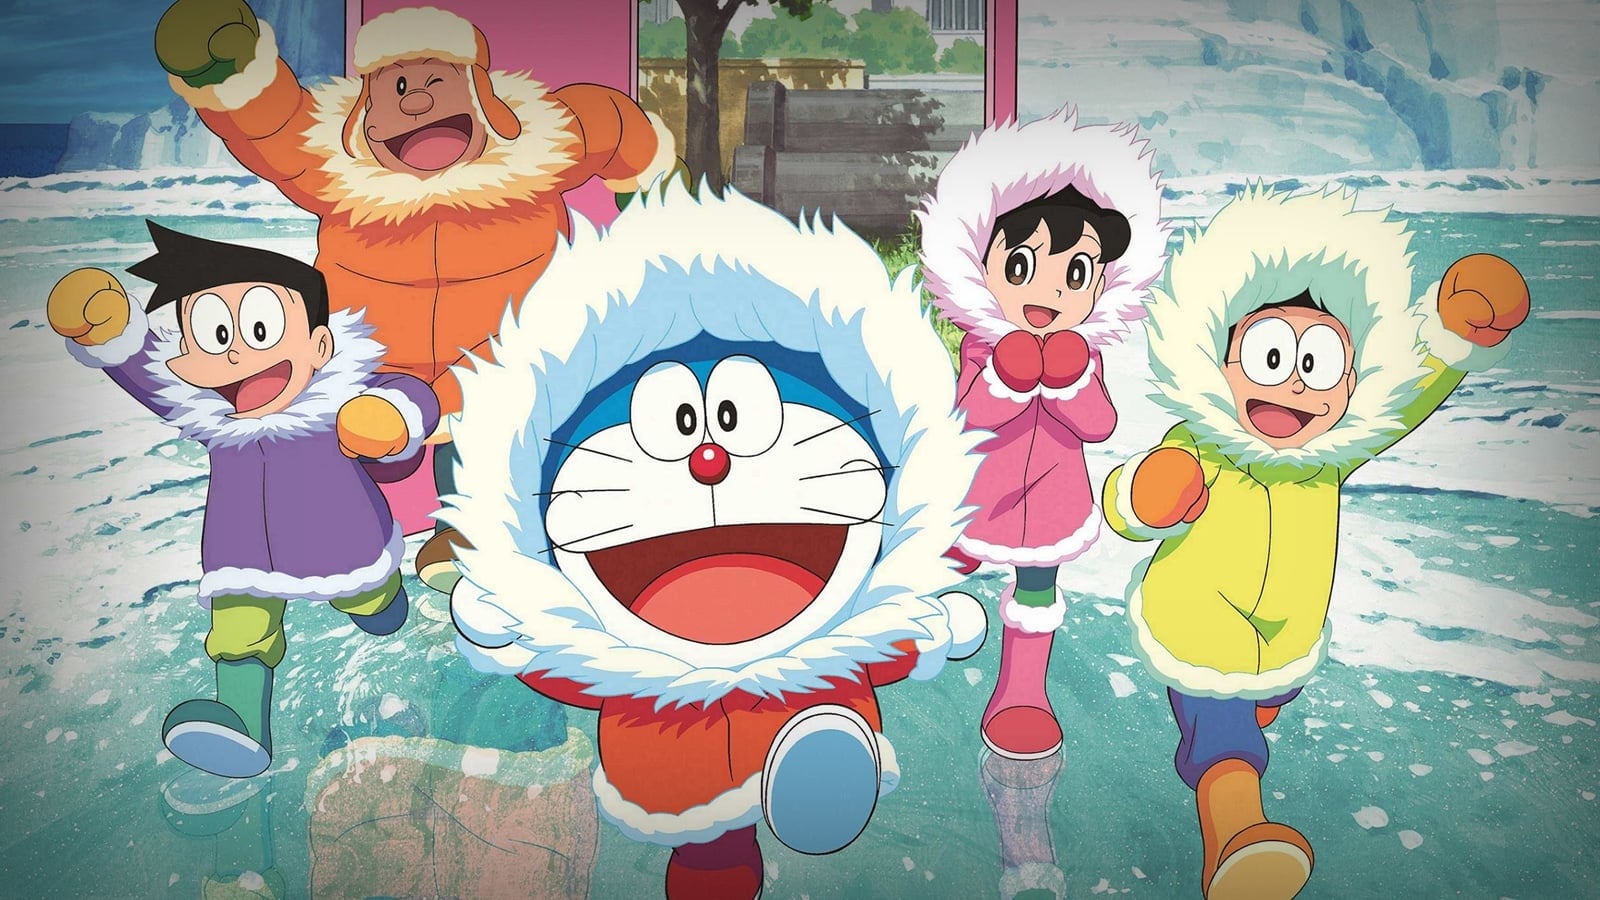 Doraemon: nobita và chuyến thám hiểm nam cực kachi kochi - Doraemon the movie 2017: great adventure in the antarctic kachi kochi